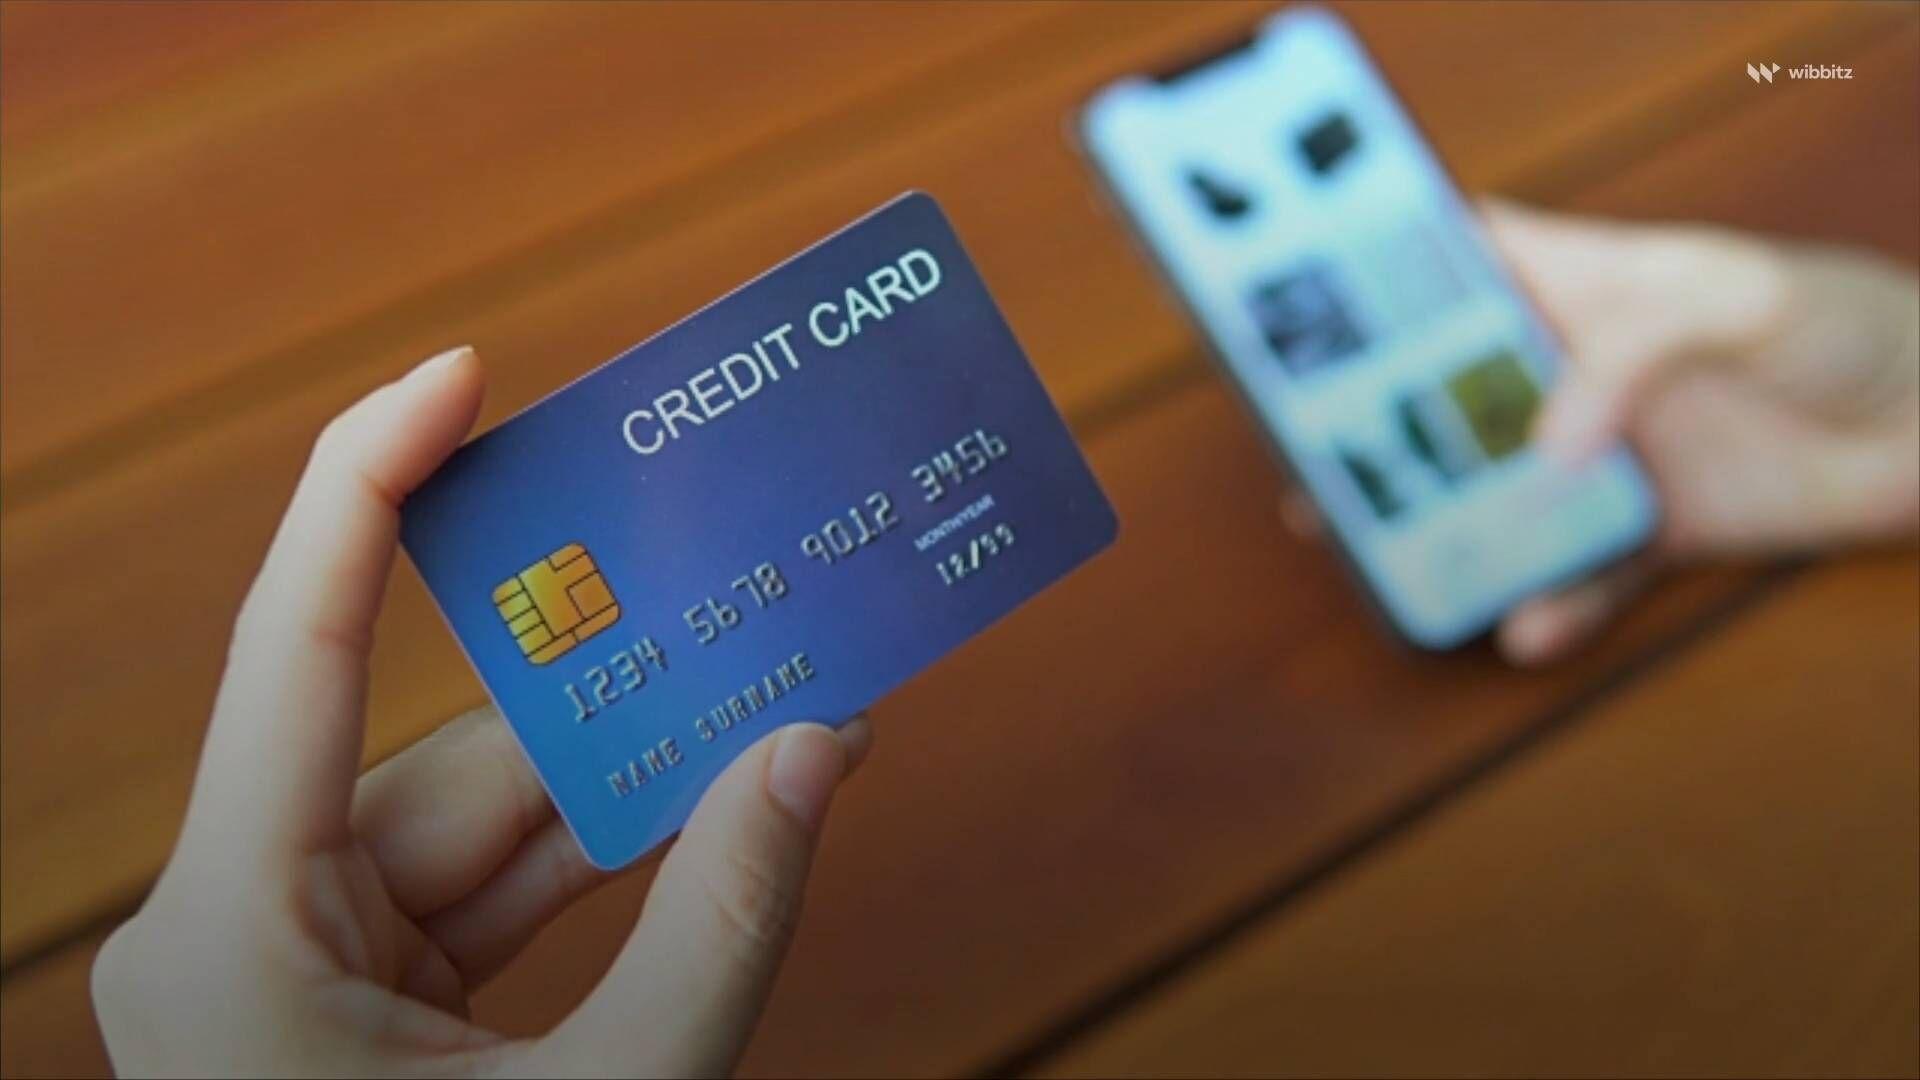 Mars Card - Debit & Credit Card Skin